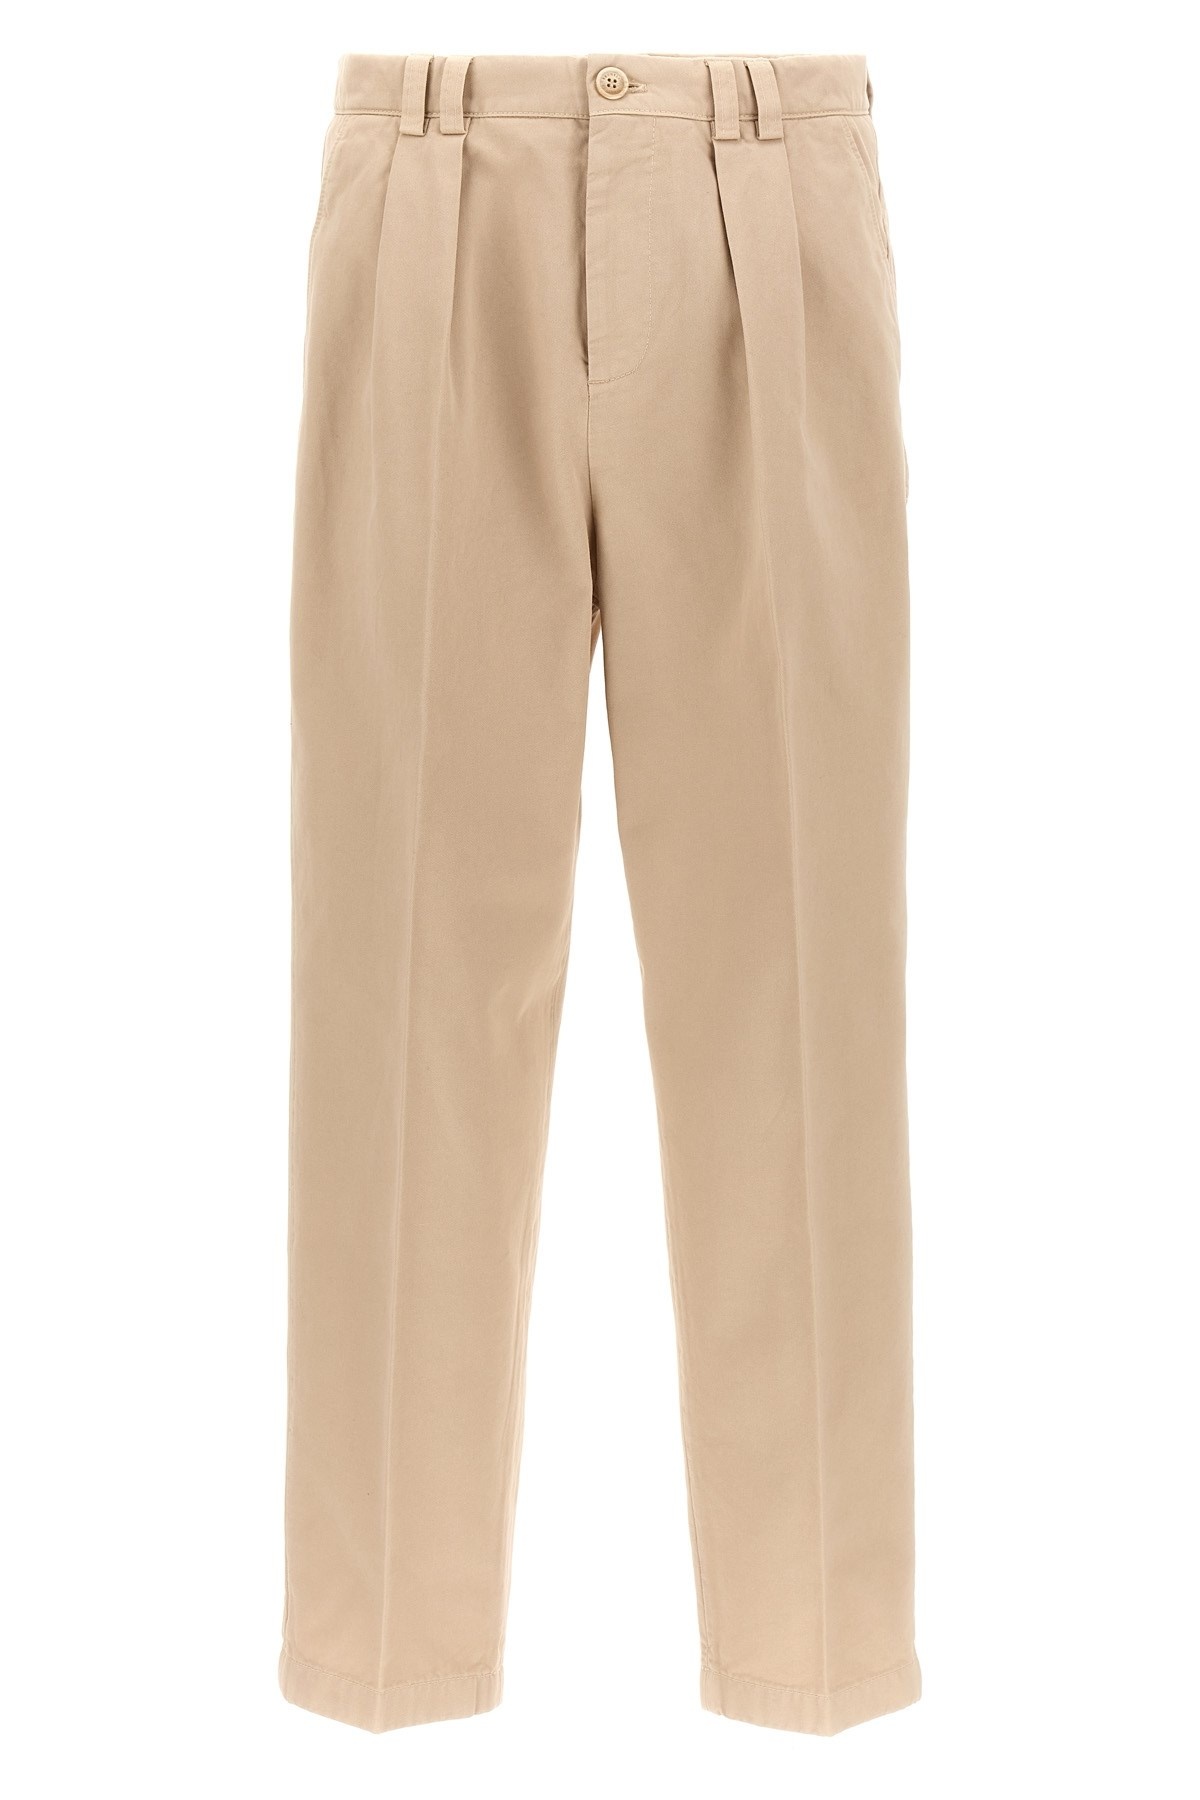 Cotton pants with front pleats - 1